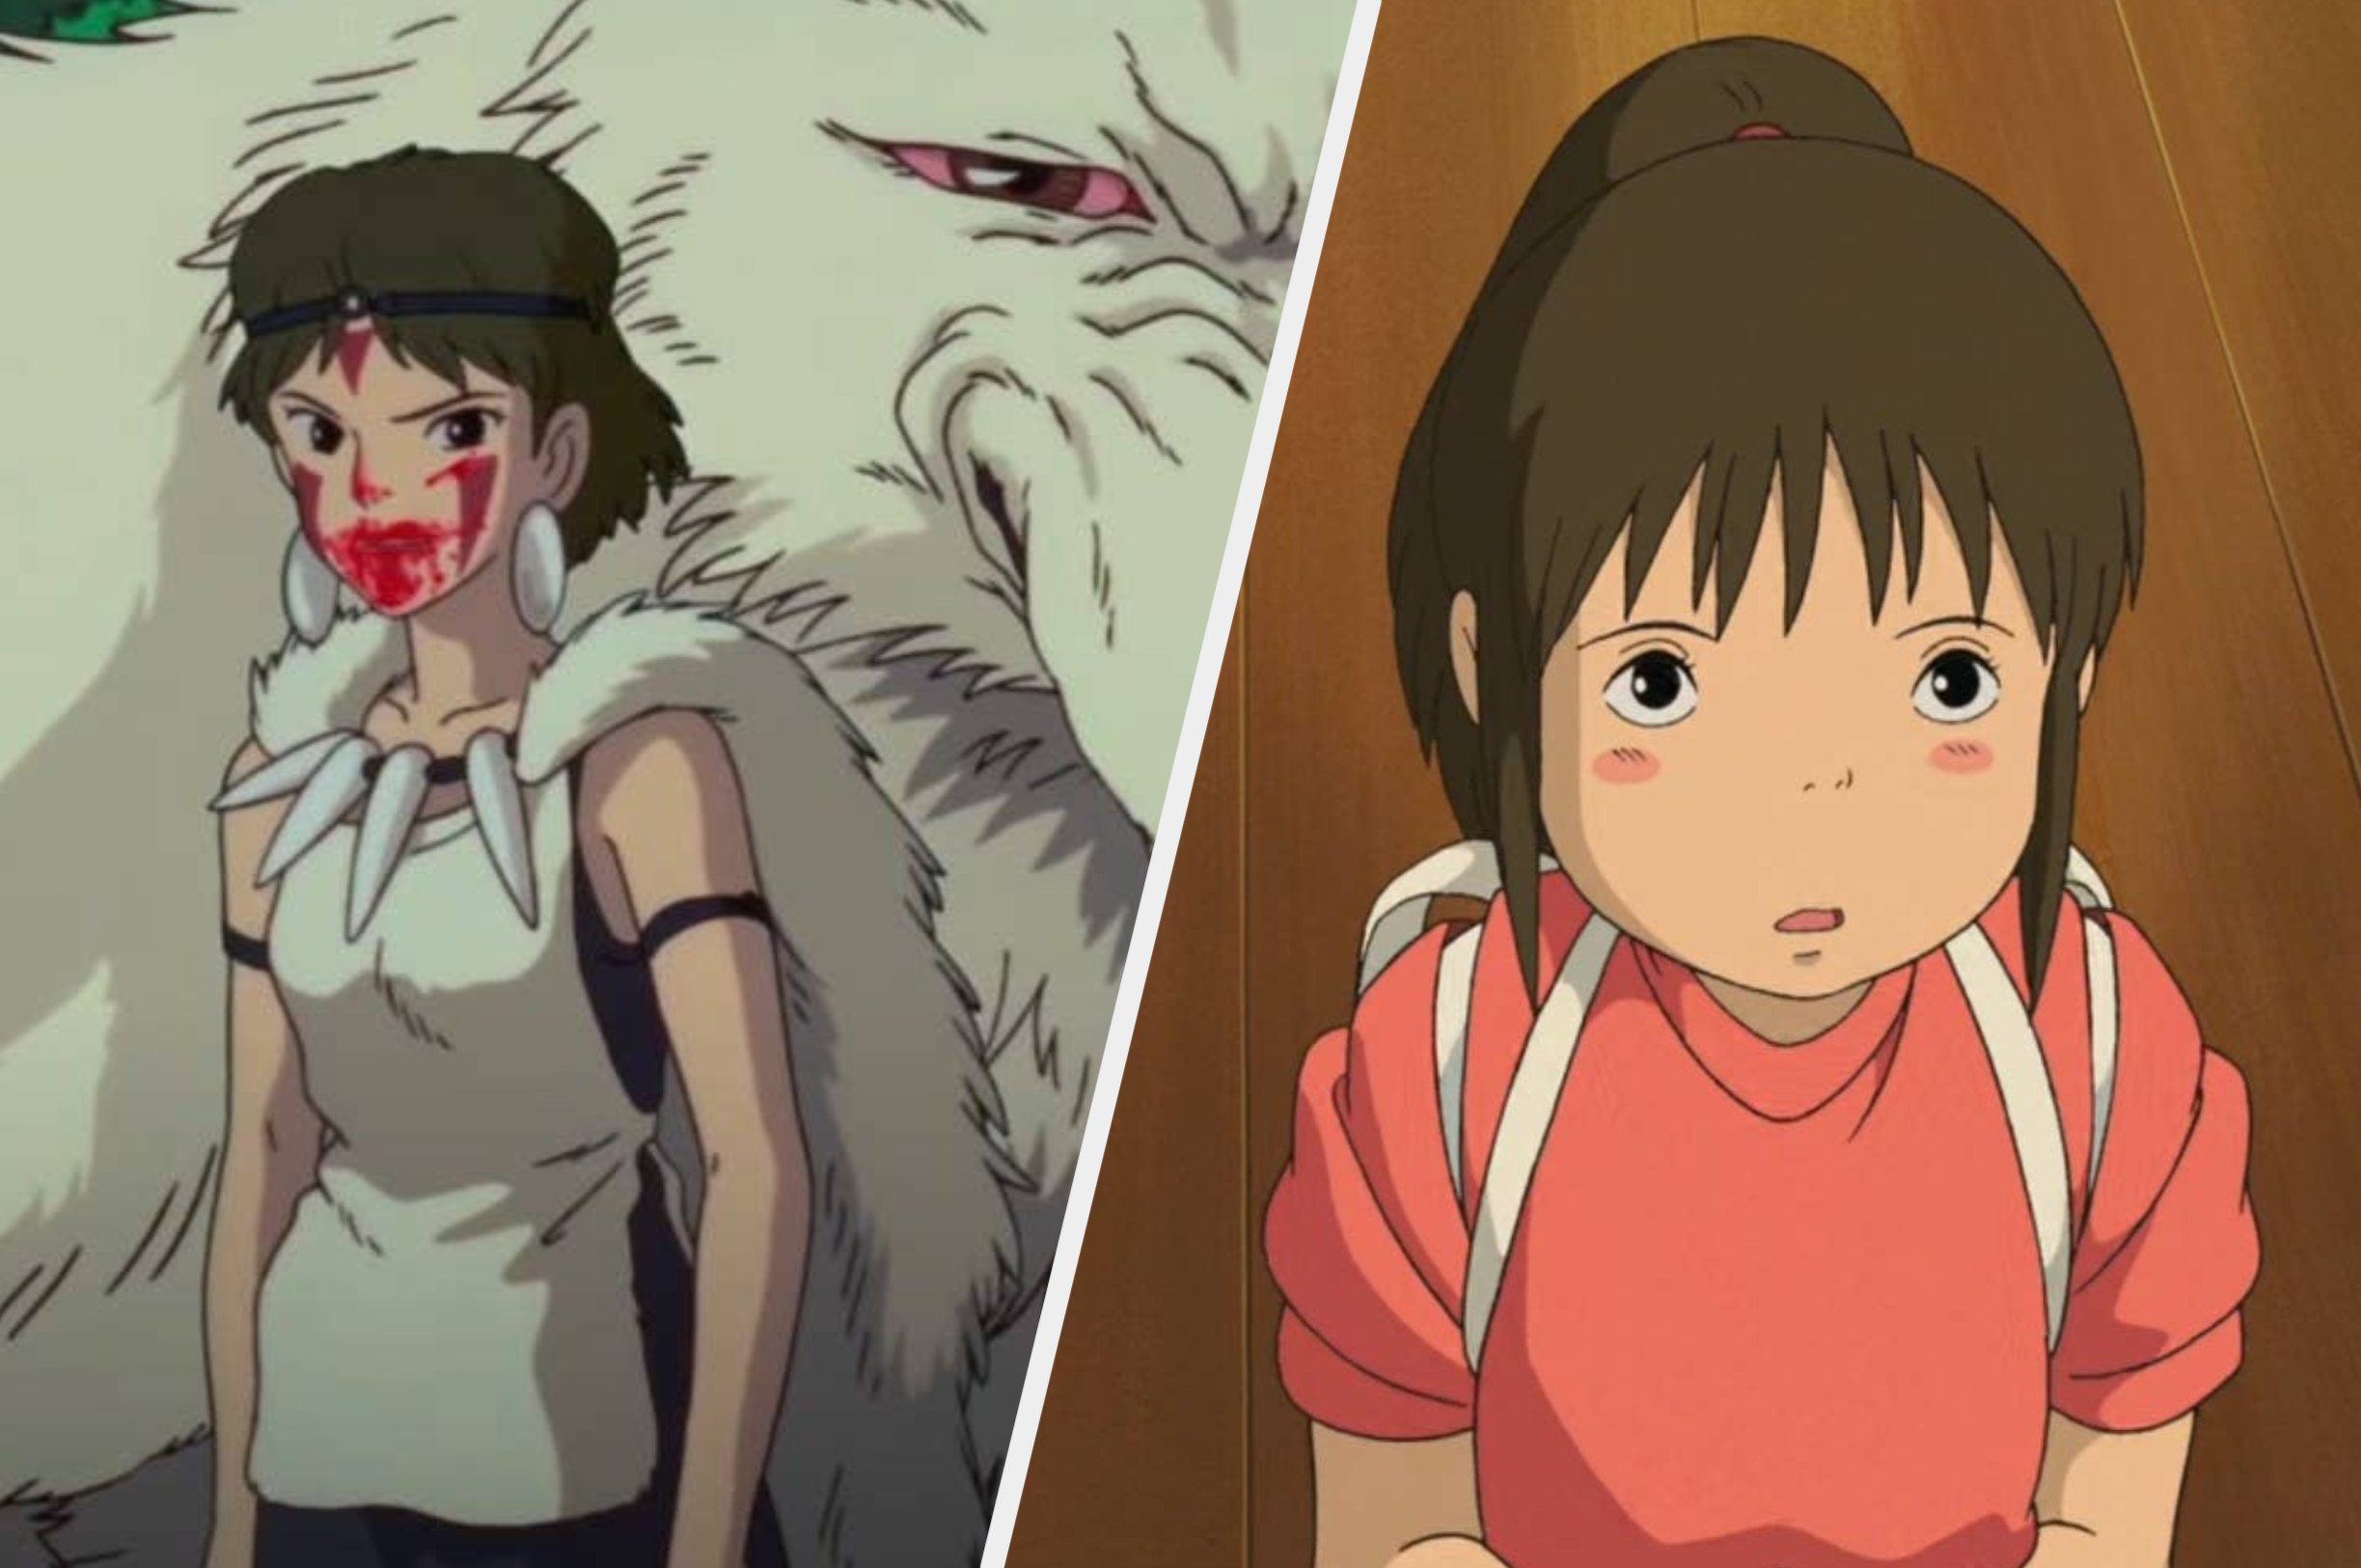 Studio Ghibli Characters List